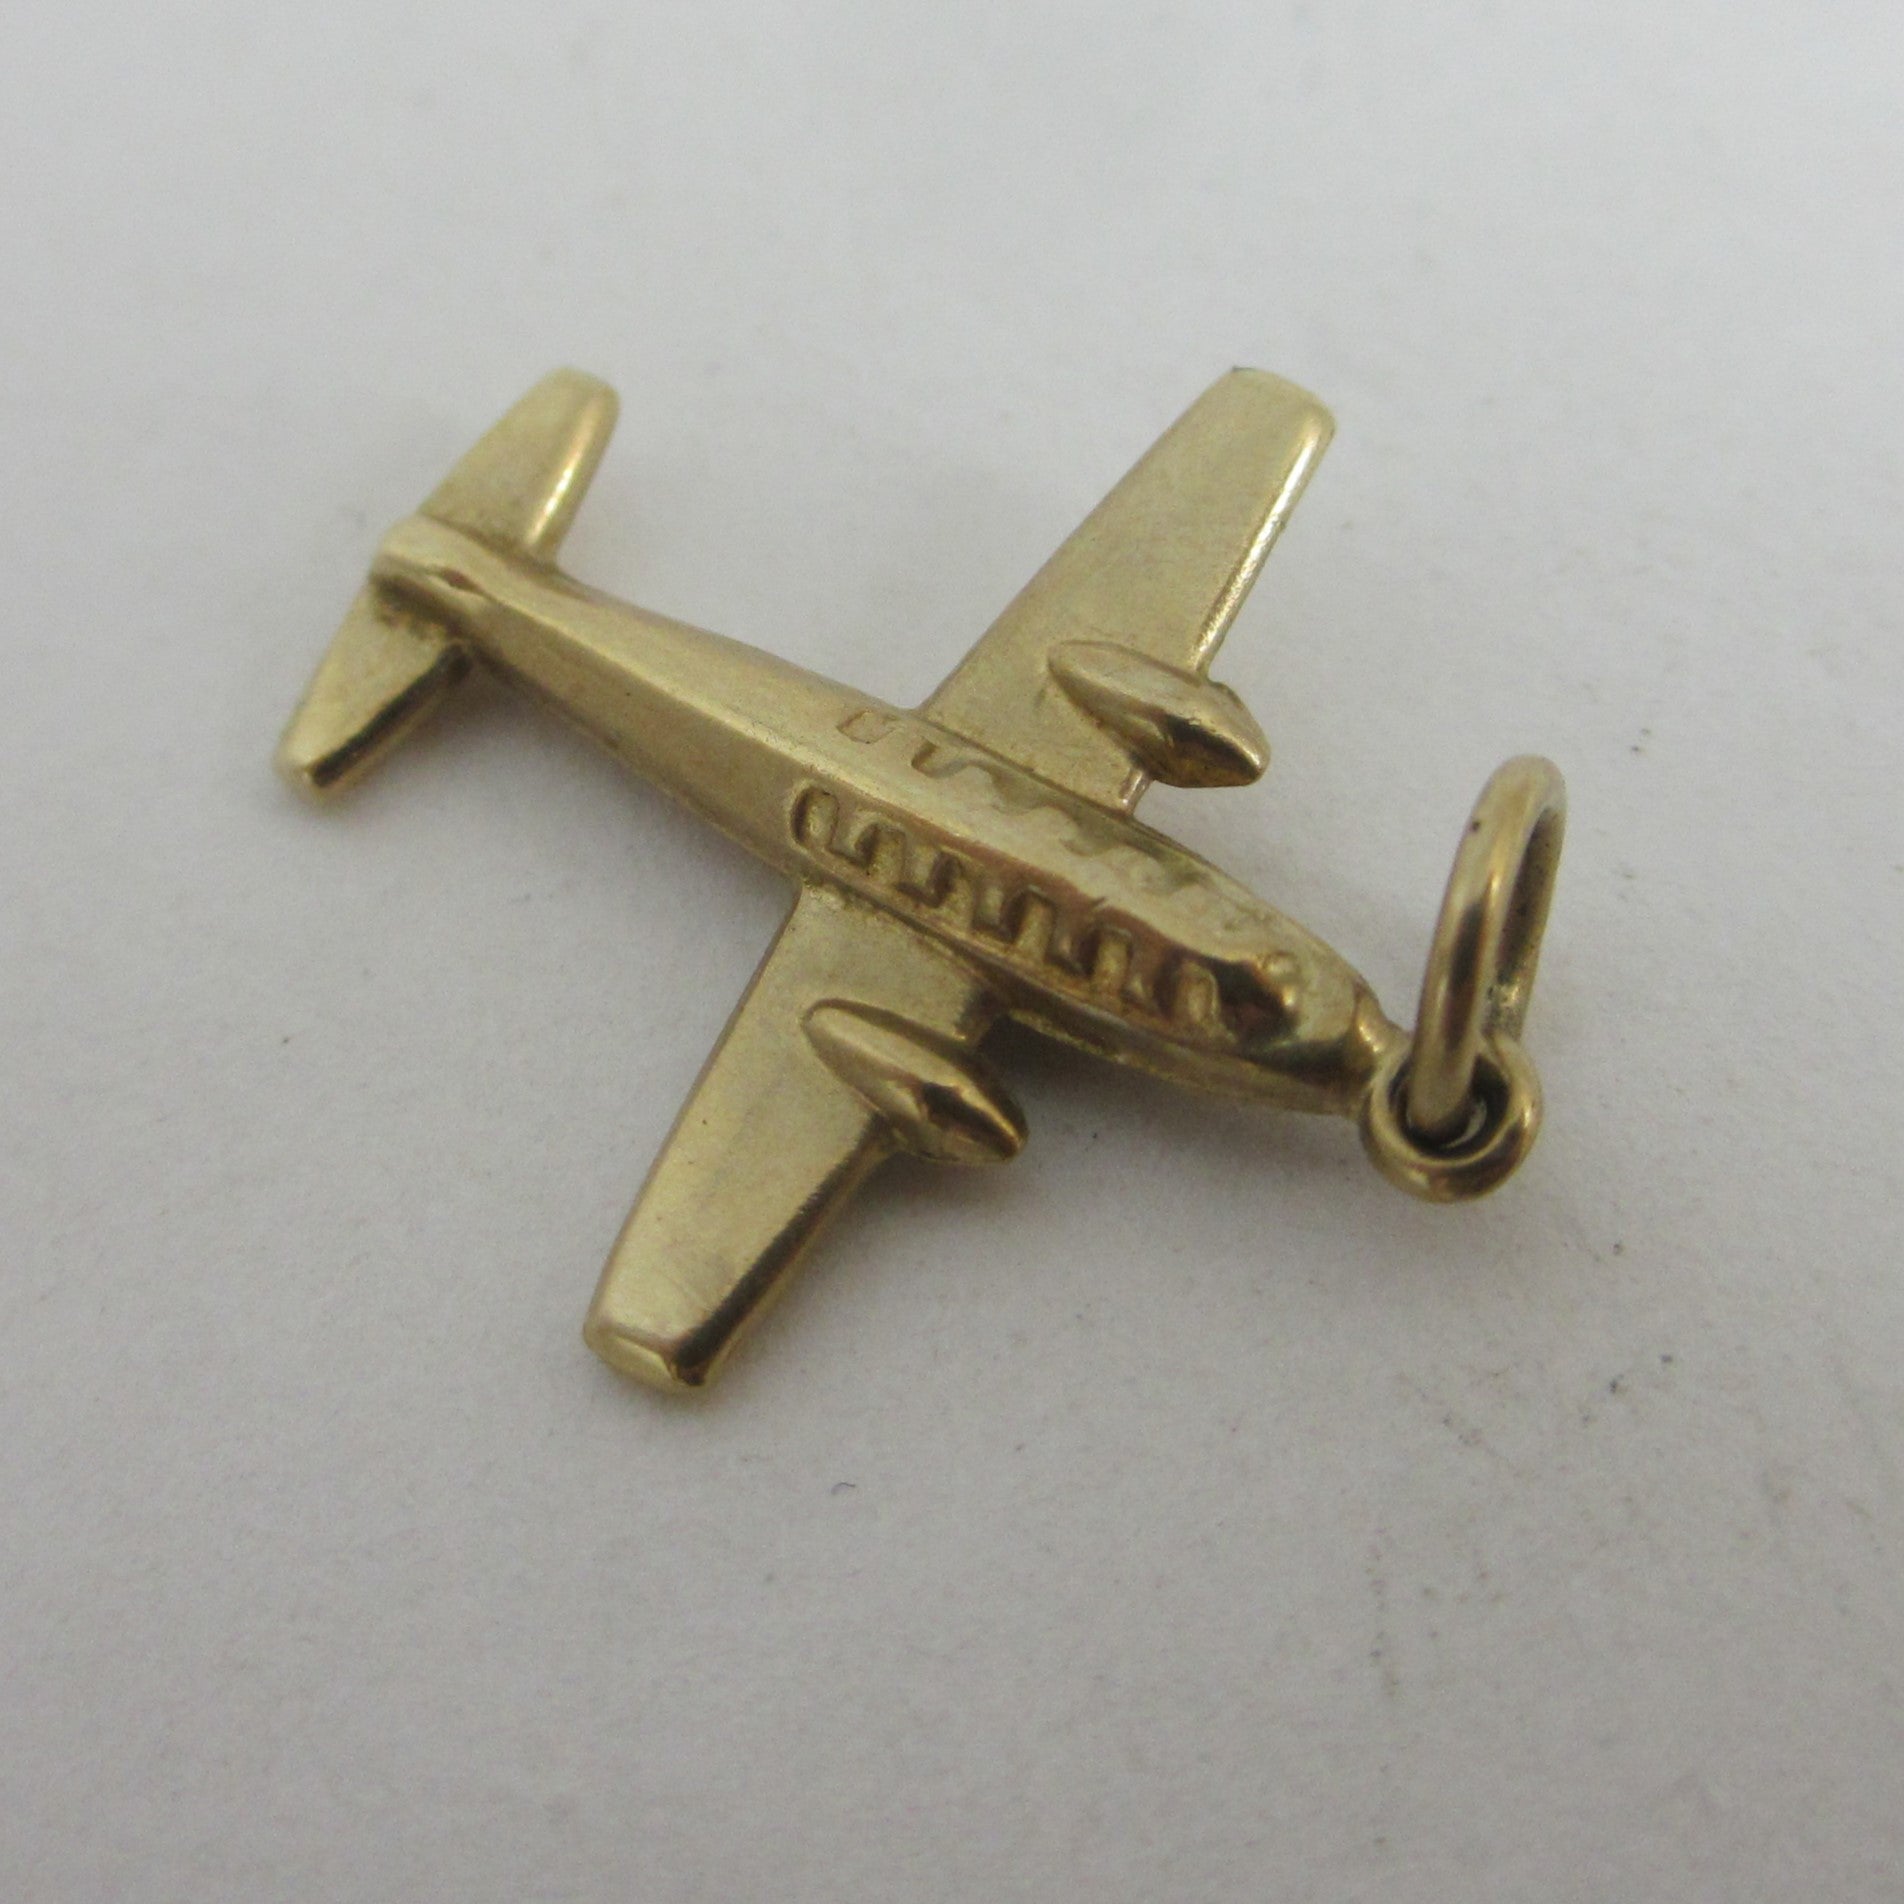 Aeroplane Airplane 9k Gold Charm or Pendant Vintage 1977